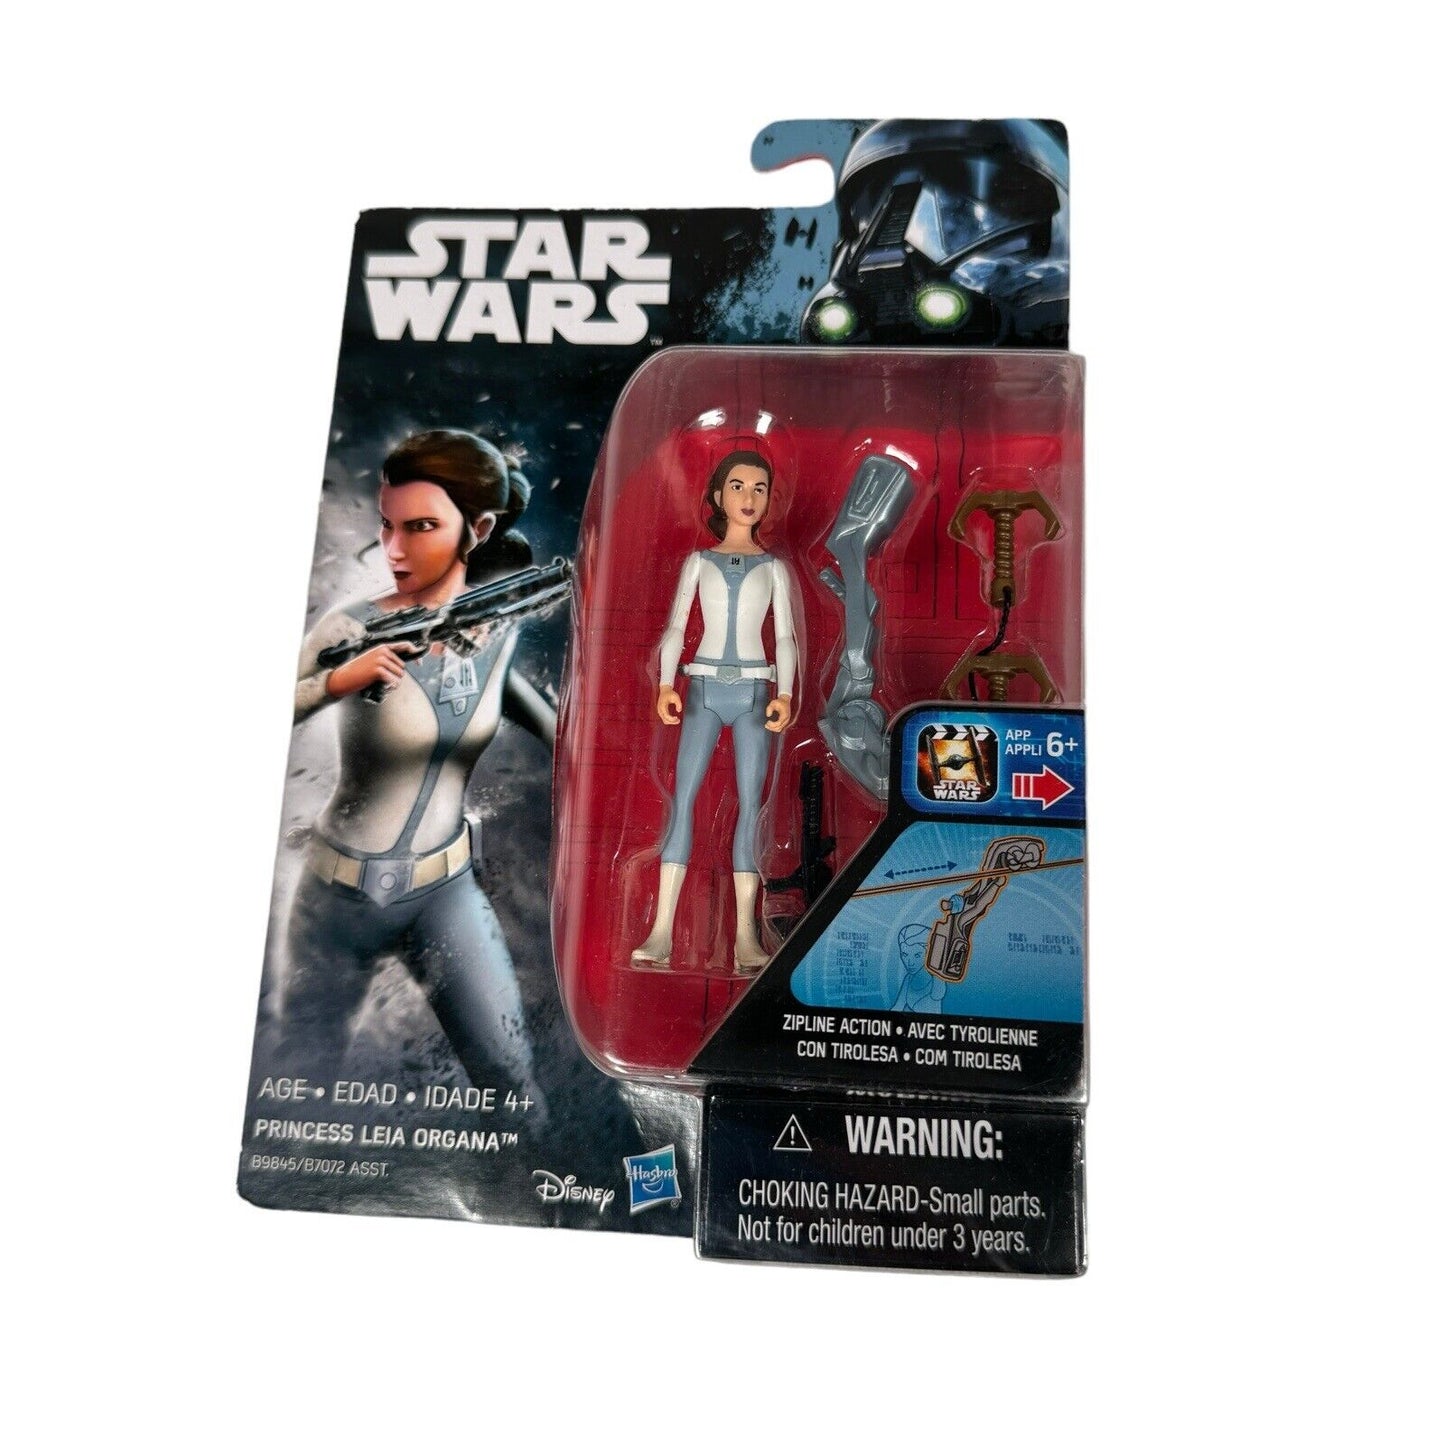 Star Wars Rebels Princess Leia Organa Action Figure